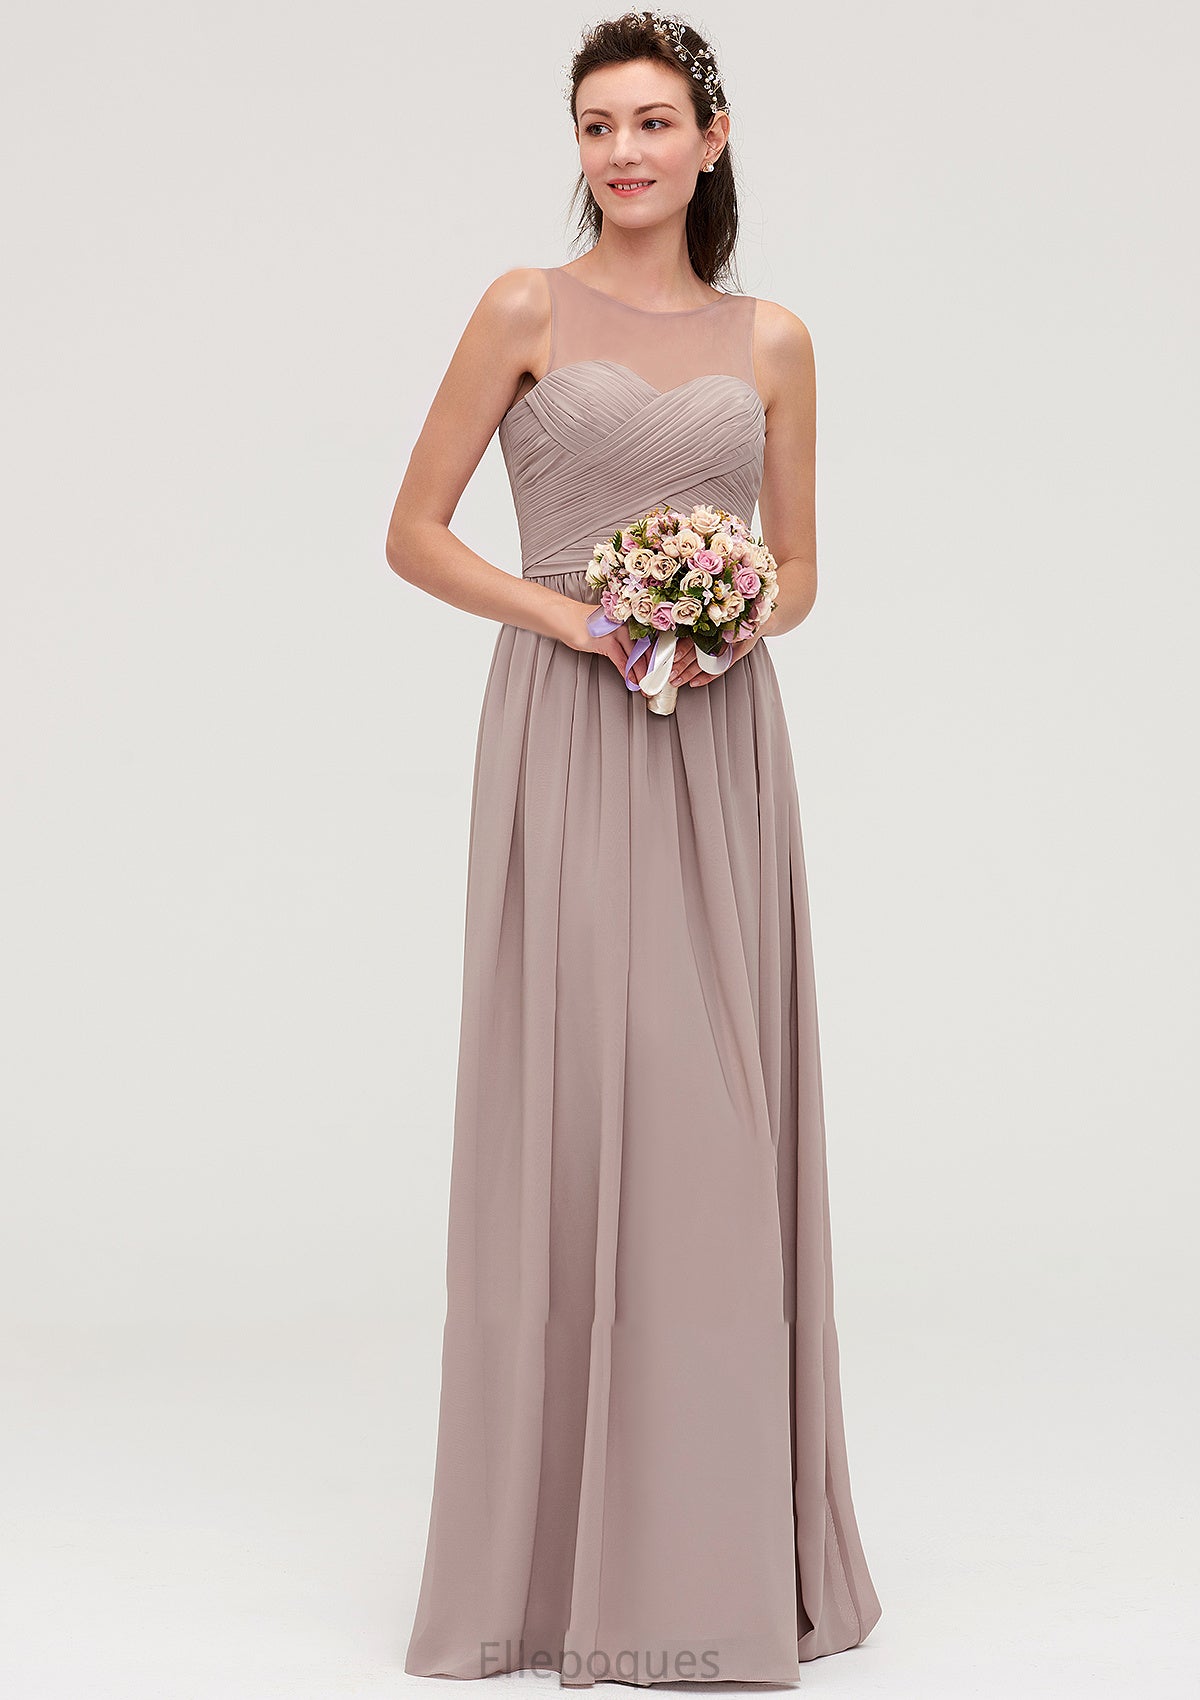 Sleeveless A-line/Princess Chiffon Long/Floor-Length Bridesmaid Dresseses With Pleated Gracie HOP0025479